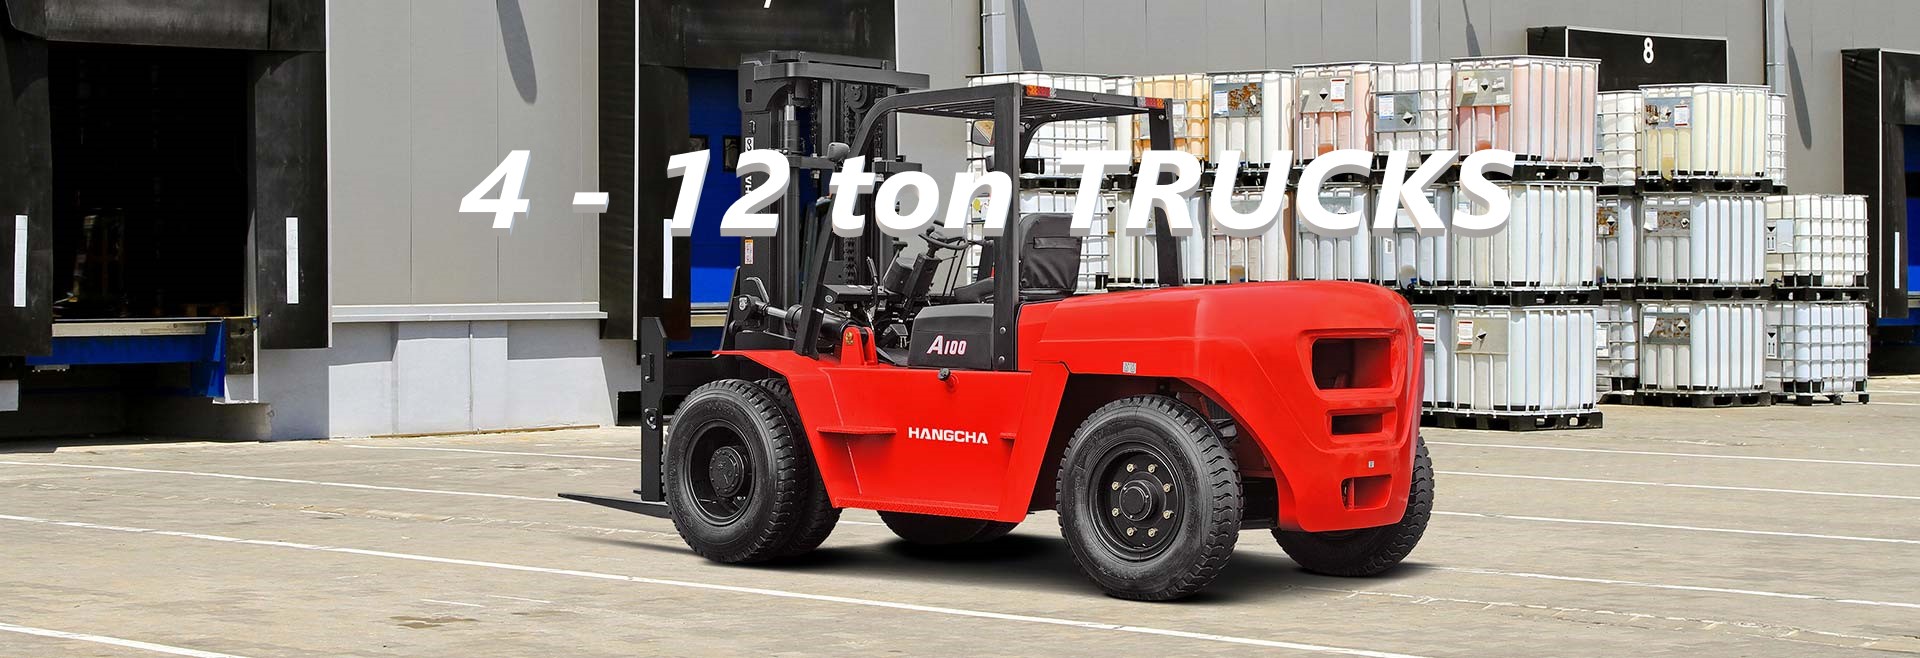 xe nâng Hangcha 4-12 tấn heavy trucks